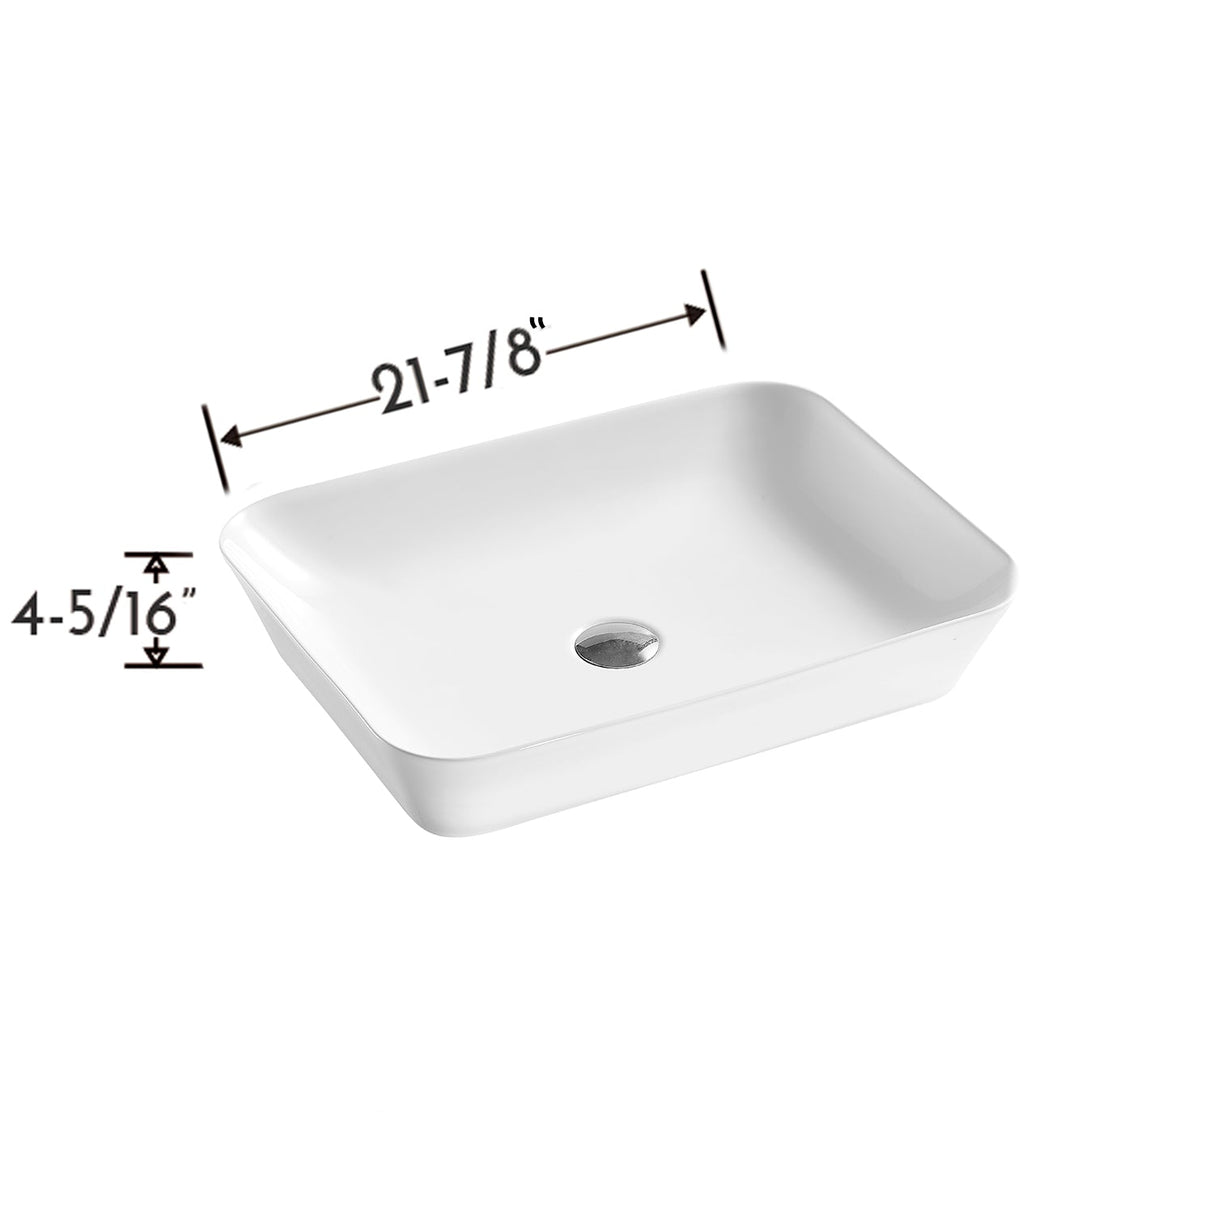 DAX Ceramic Rectangular Bathroom Vessel Basin, 22", White Glossy DAX-CL1469-WG